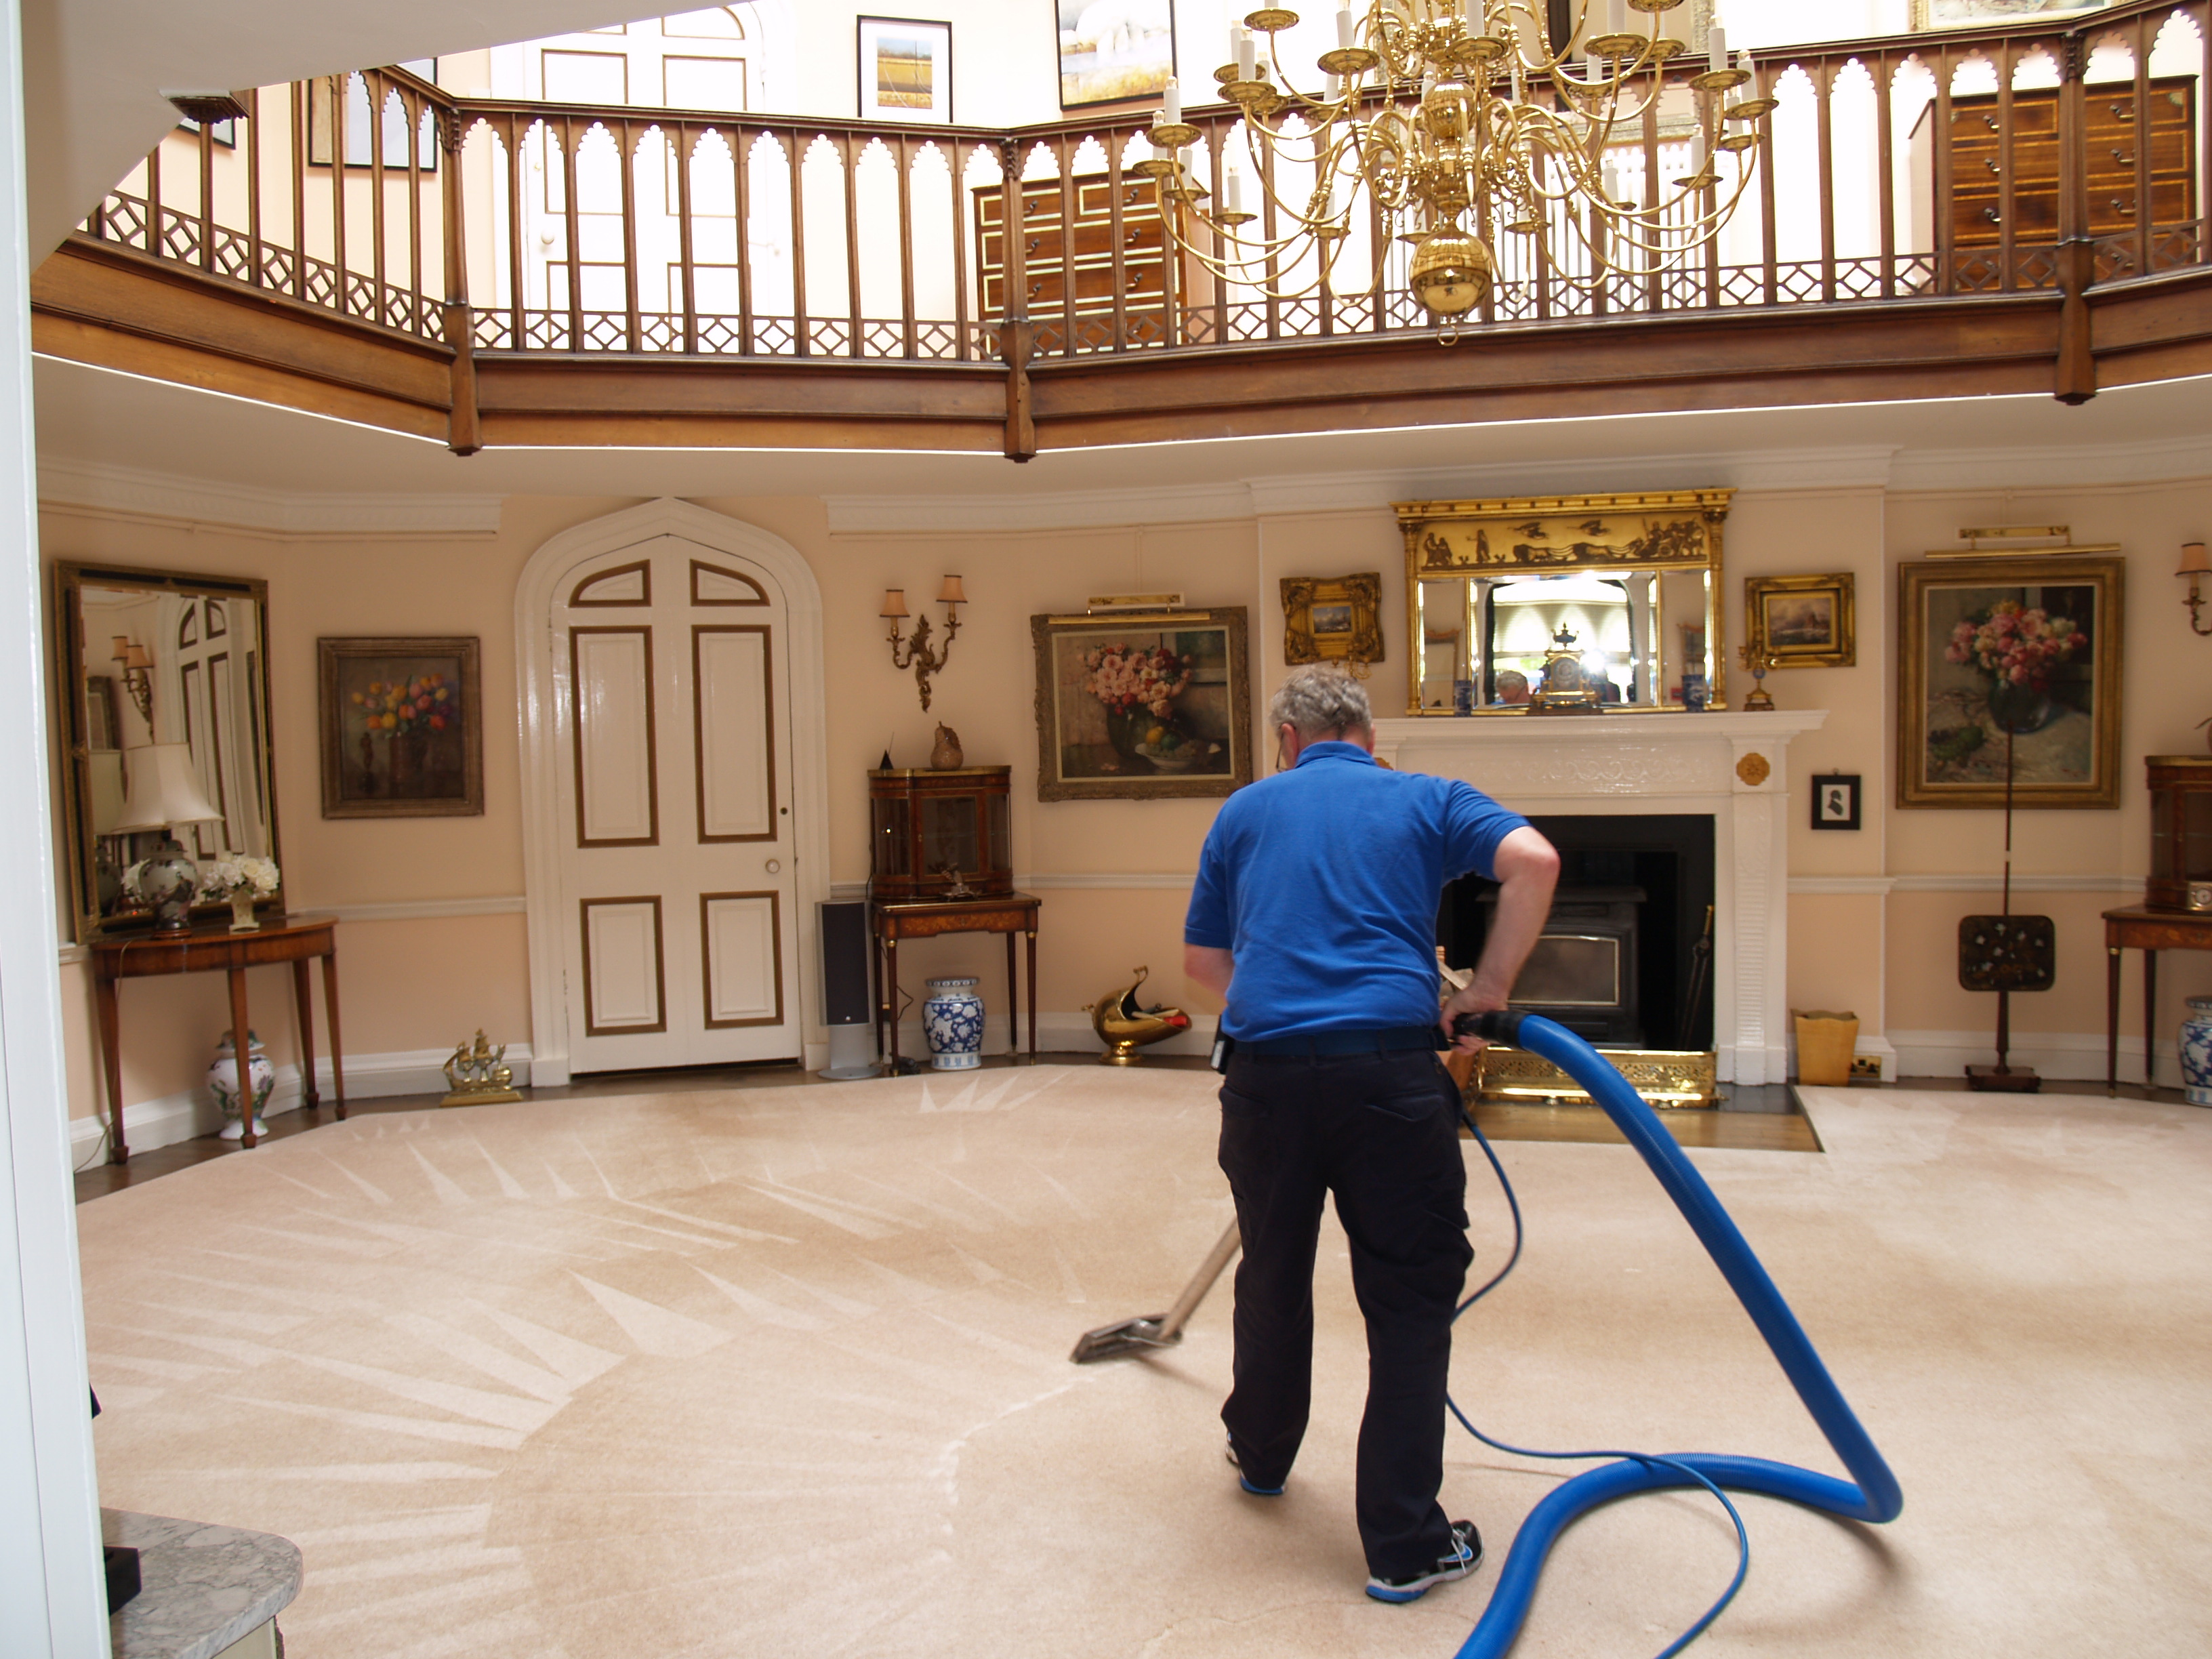 Man Cleaning Carpet